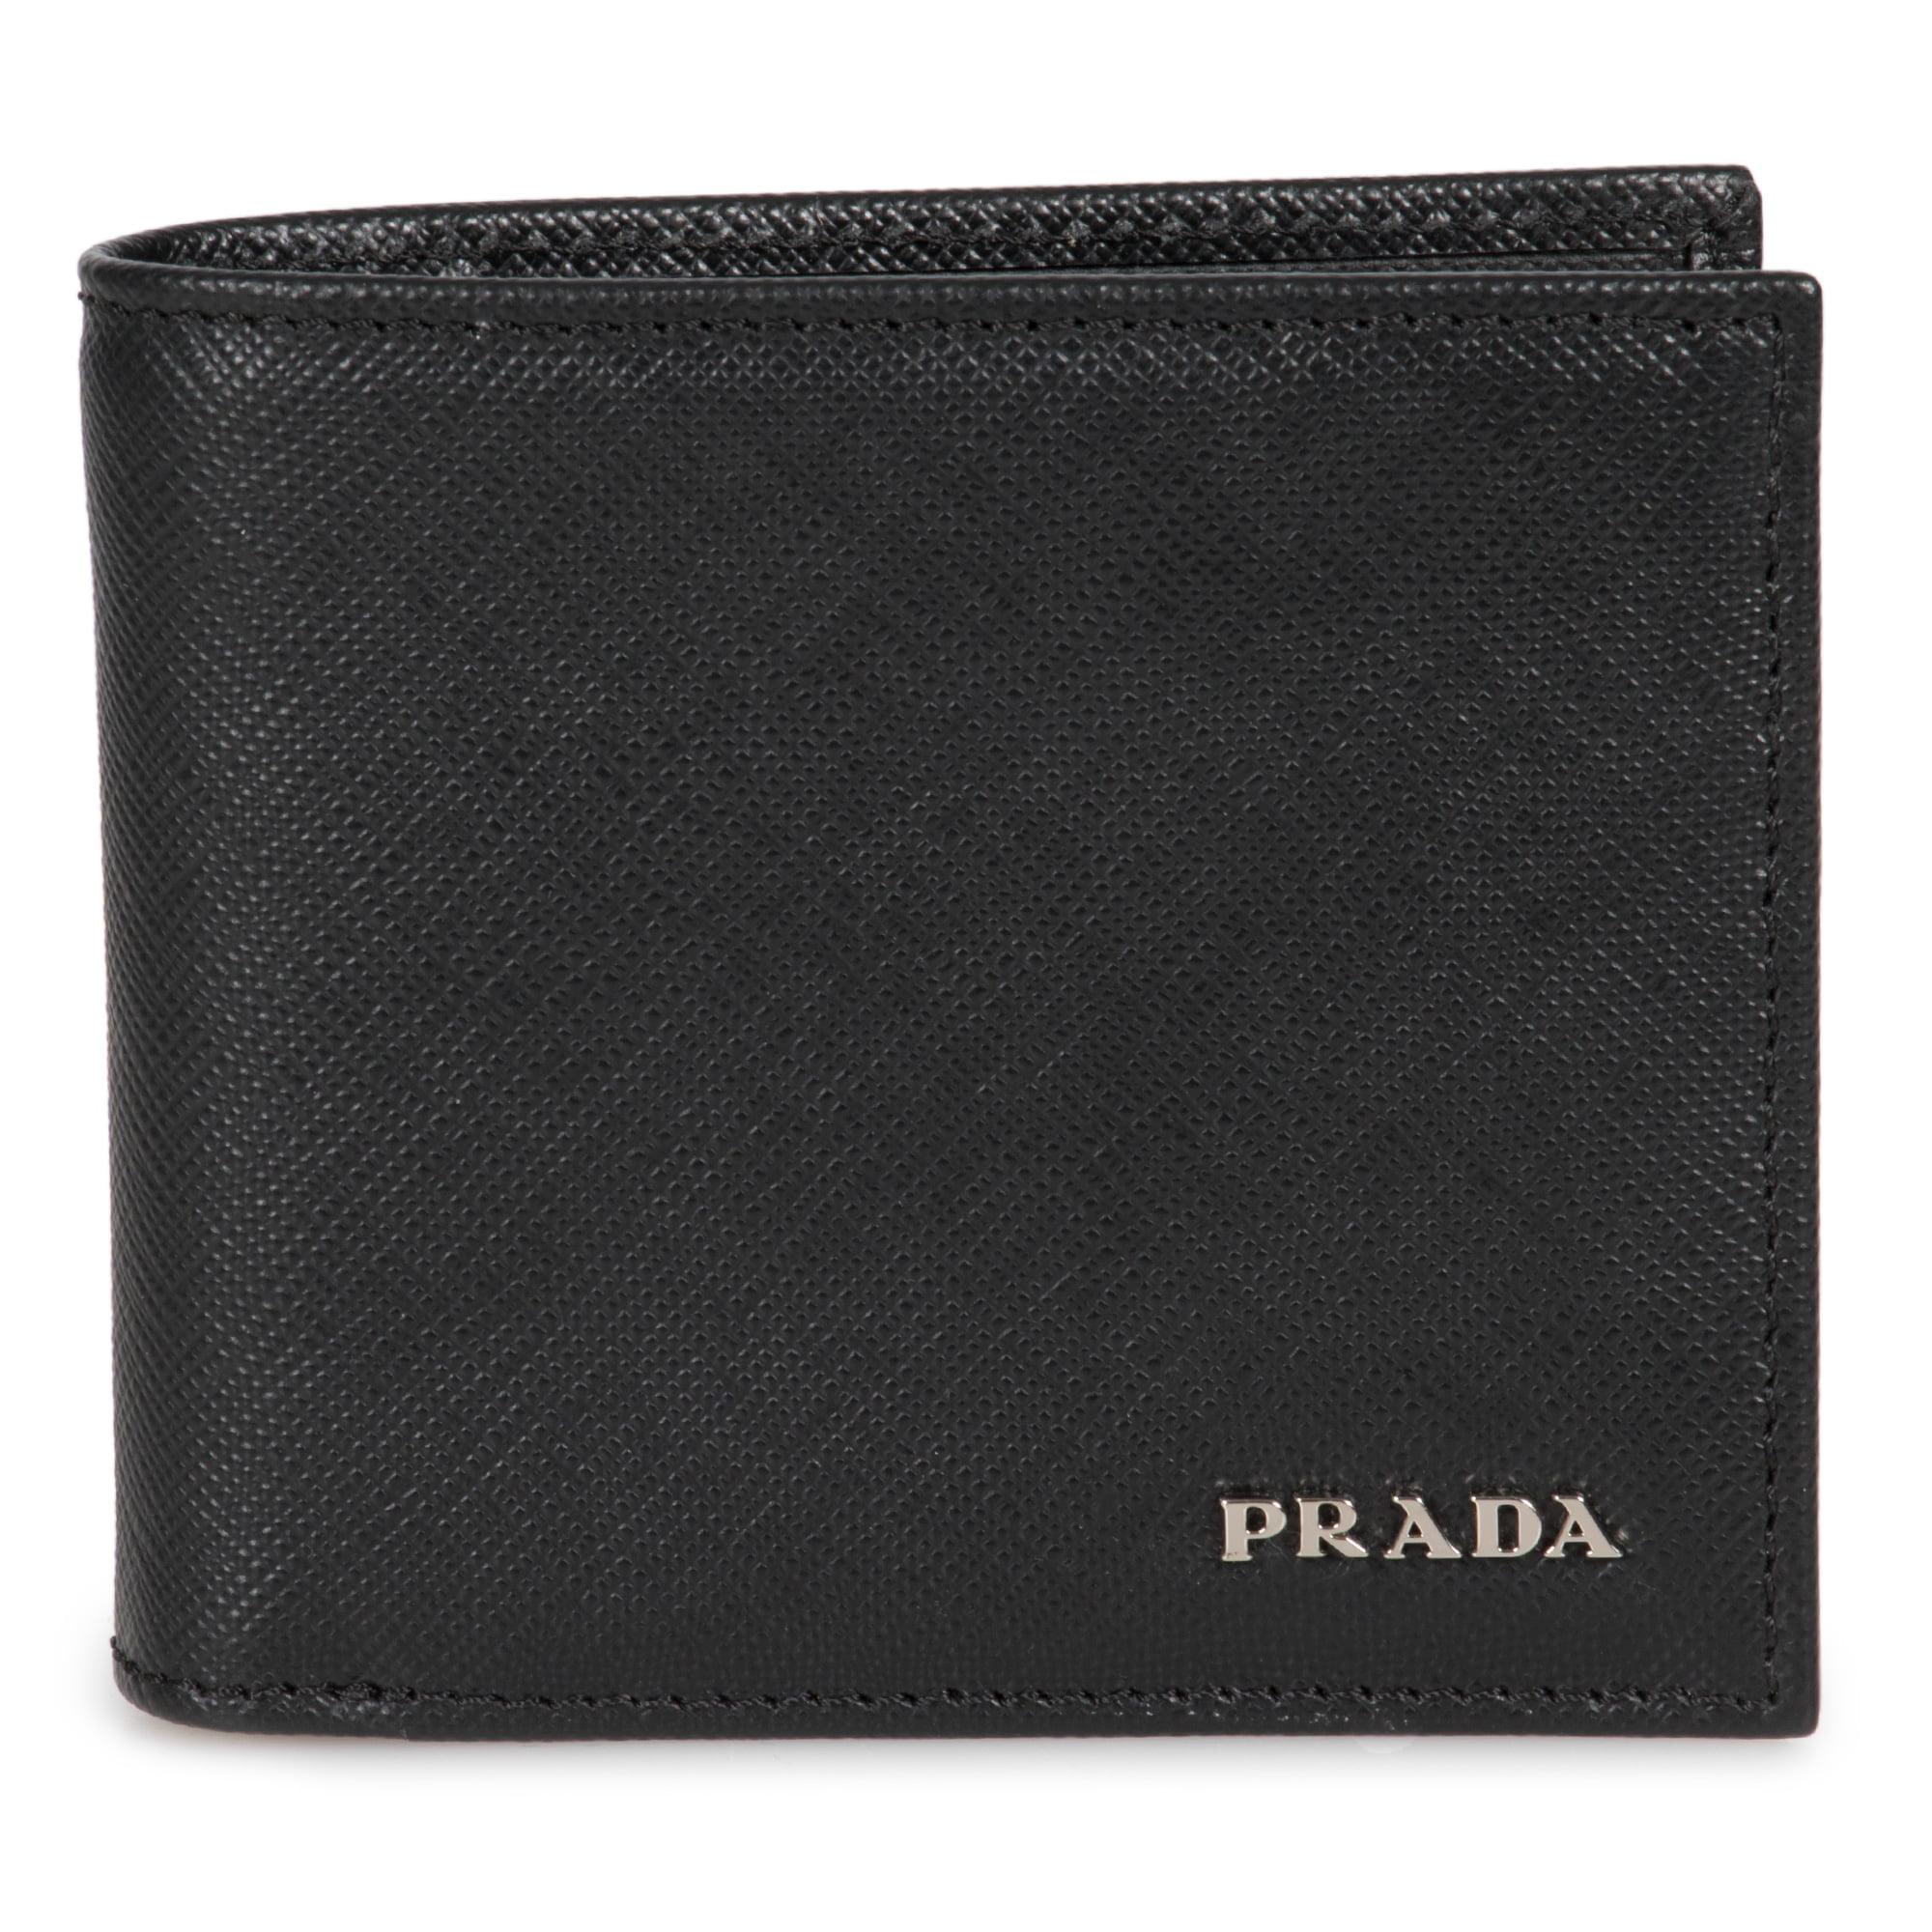 Prada - Prada Black Saffiano Leather Wallet 2MO912 QWA F0002 - Walmart.com